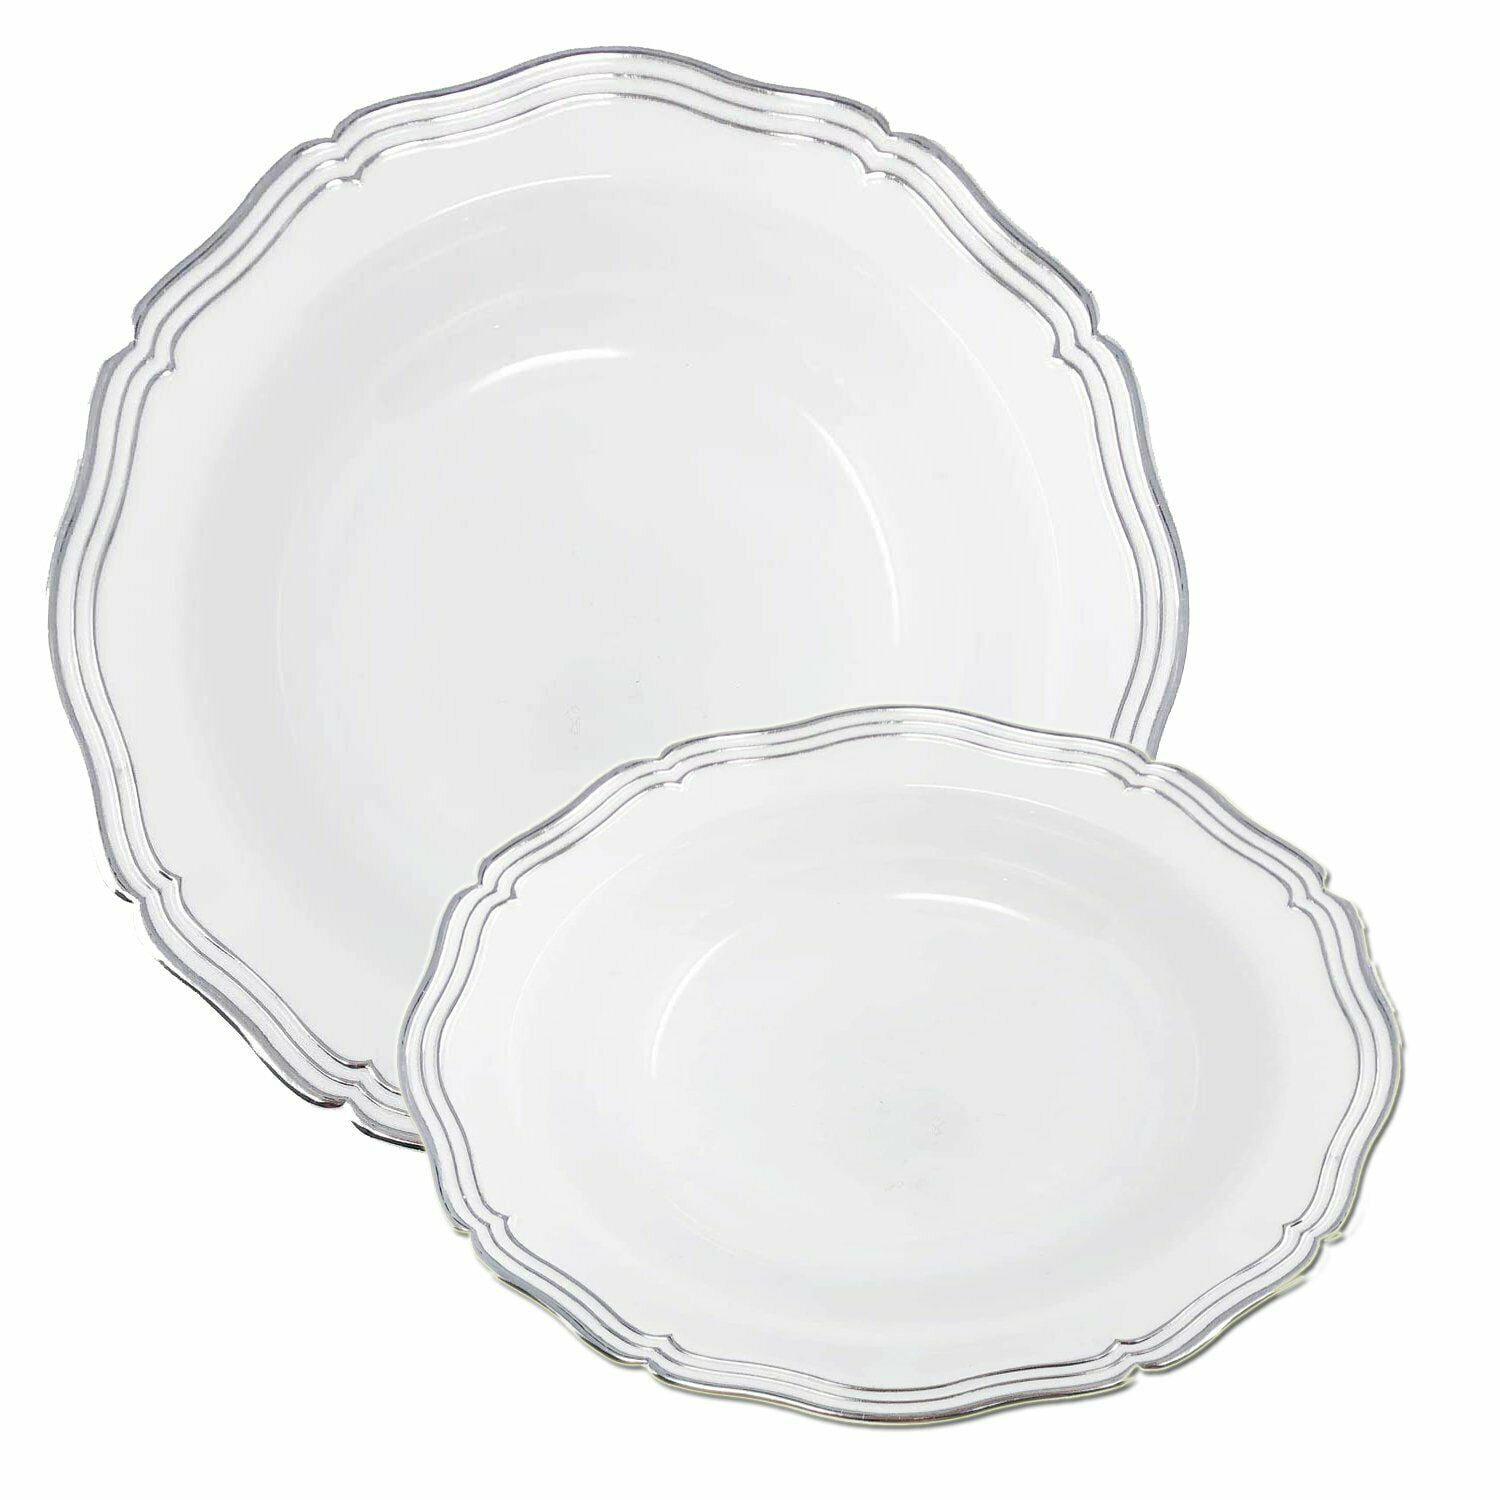 32 Disposable Plastic Party Bowls 16 x 5 oz Dessert Bowls Venetian Includes 16 x 12 oz Soup Bowls Laura Stein Designer Dinnerware Set White Bowl with Burghandy Rim & Gold Accents 